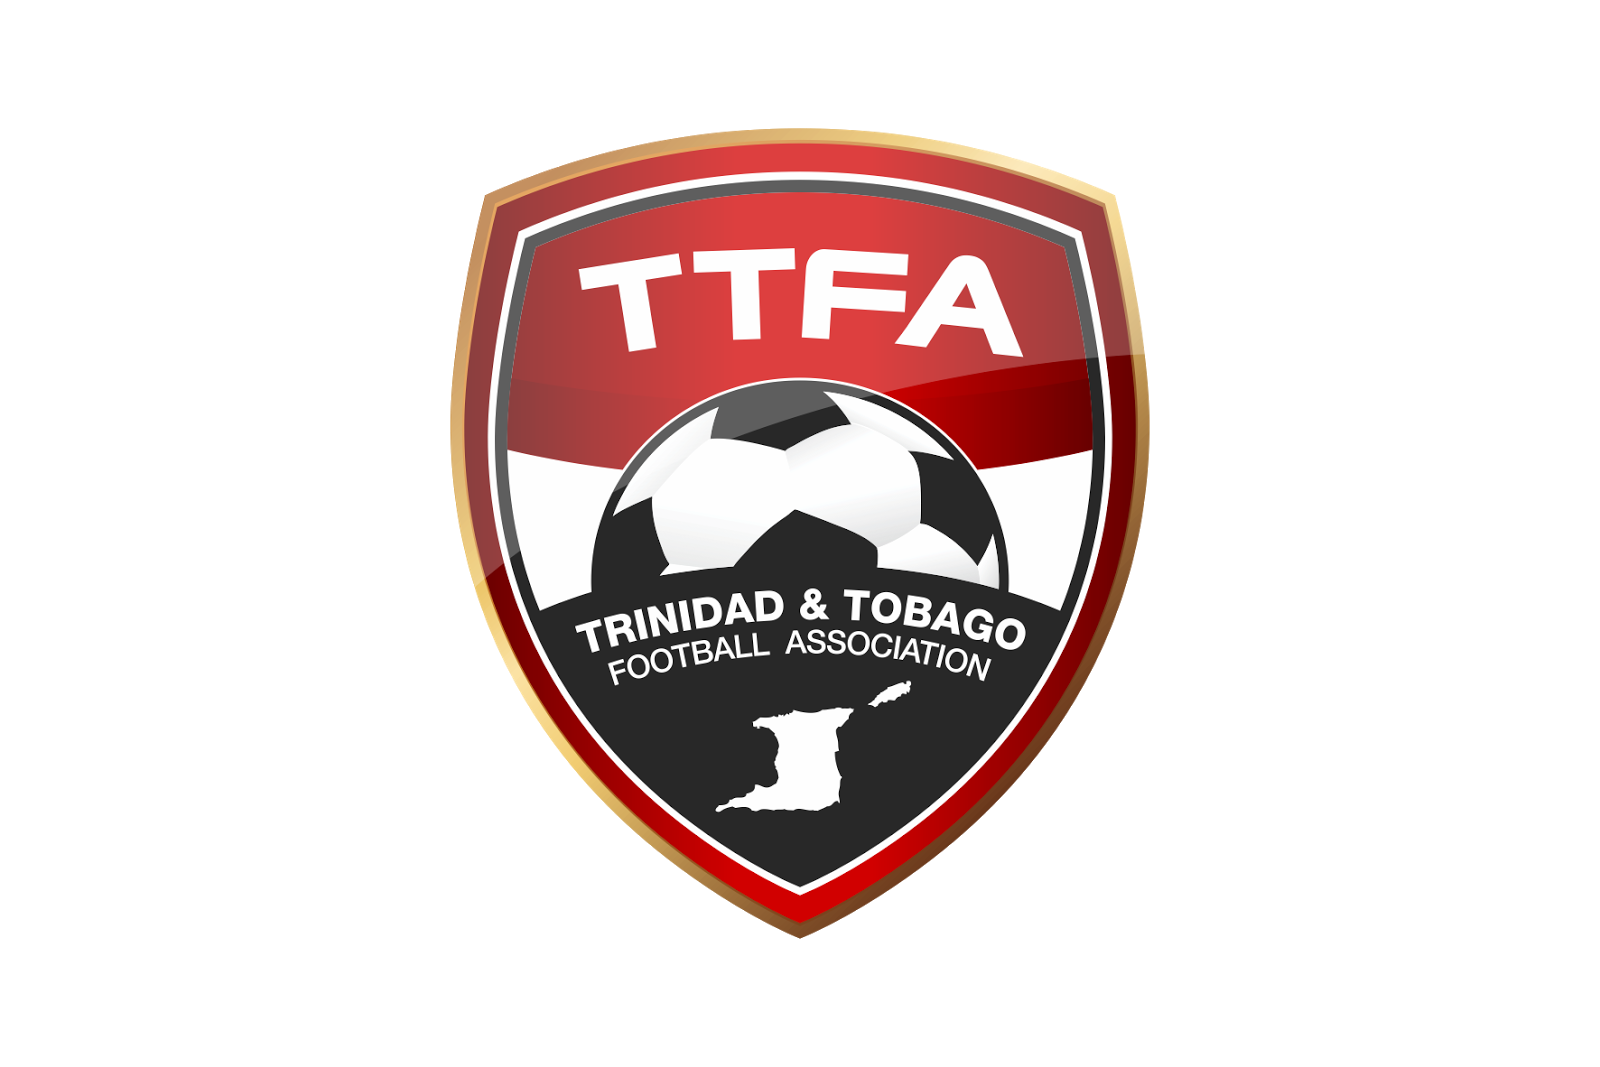 TTFA Trinidad & Tobabgo Association